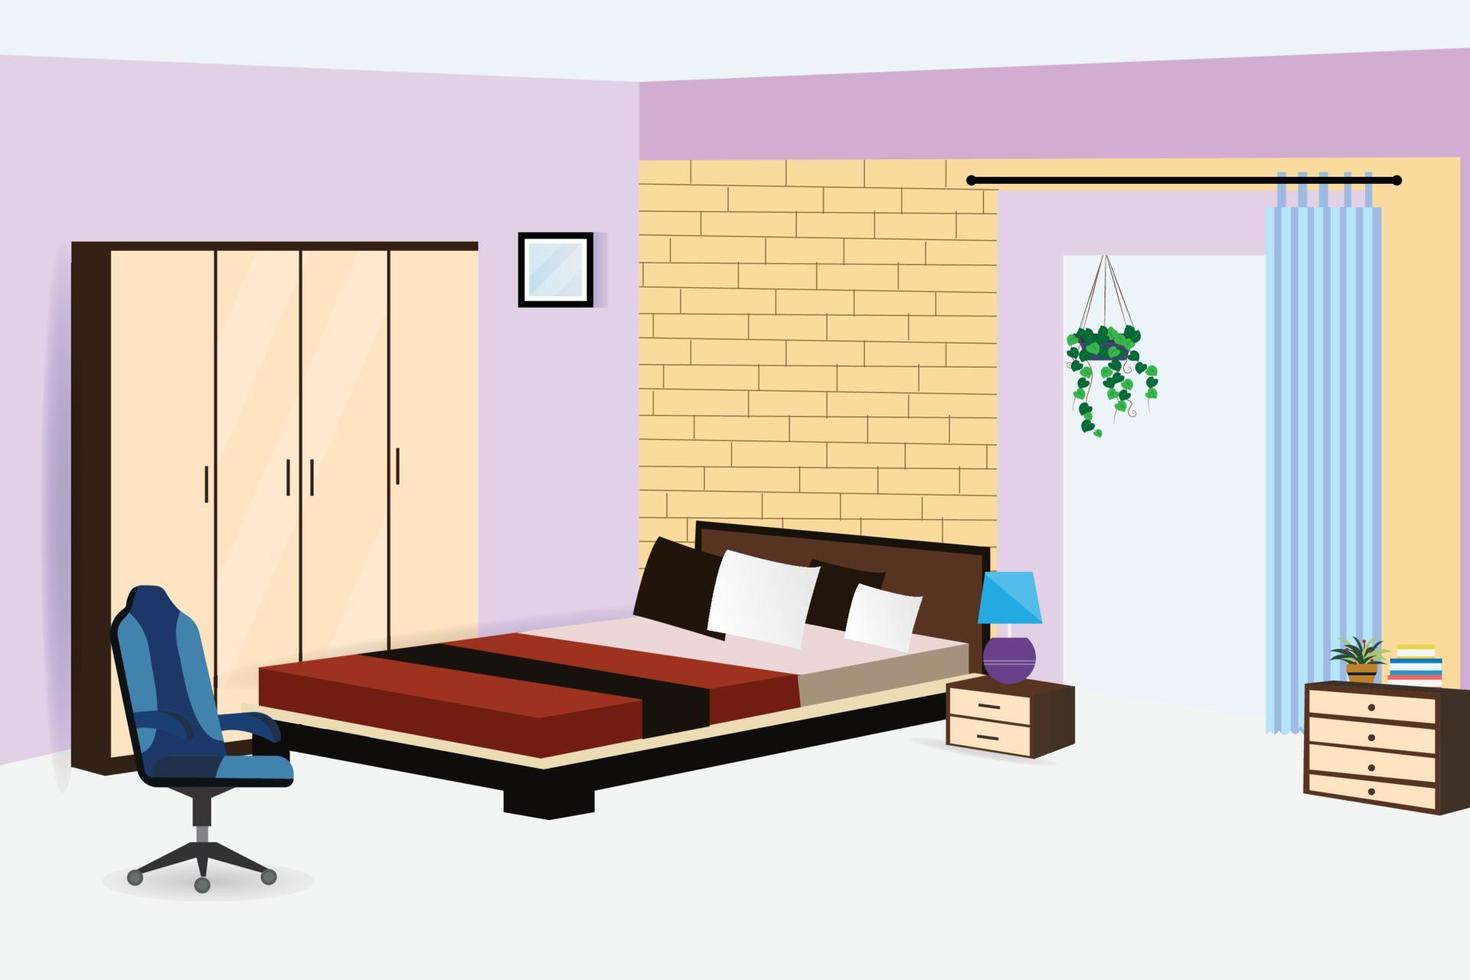 Bedroom interior room and furniture vector illustration.